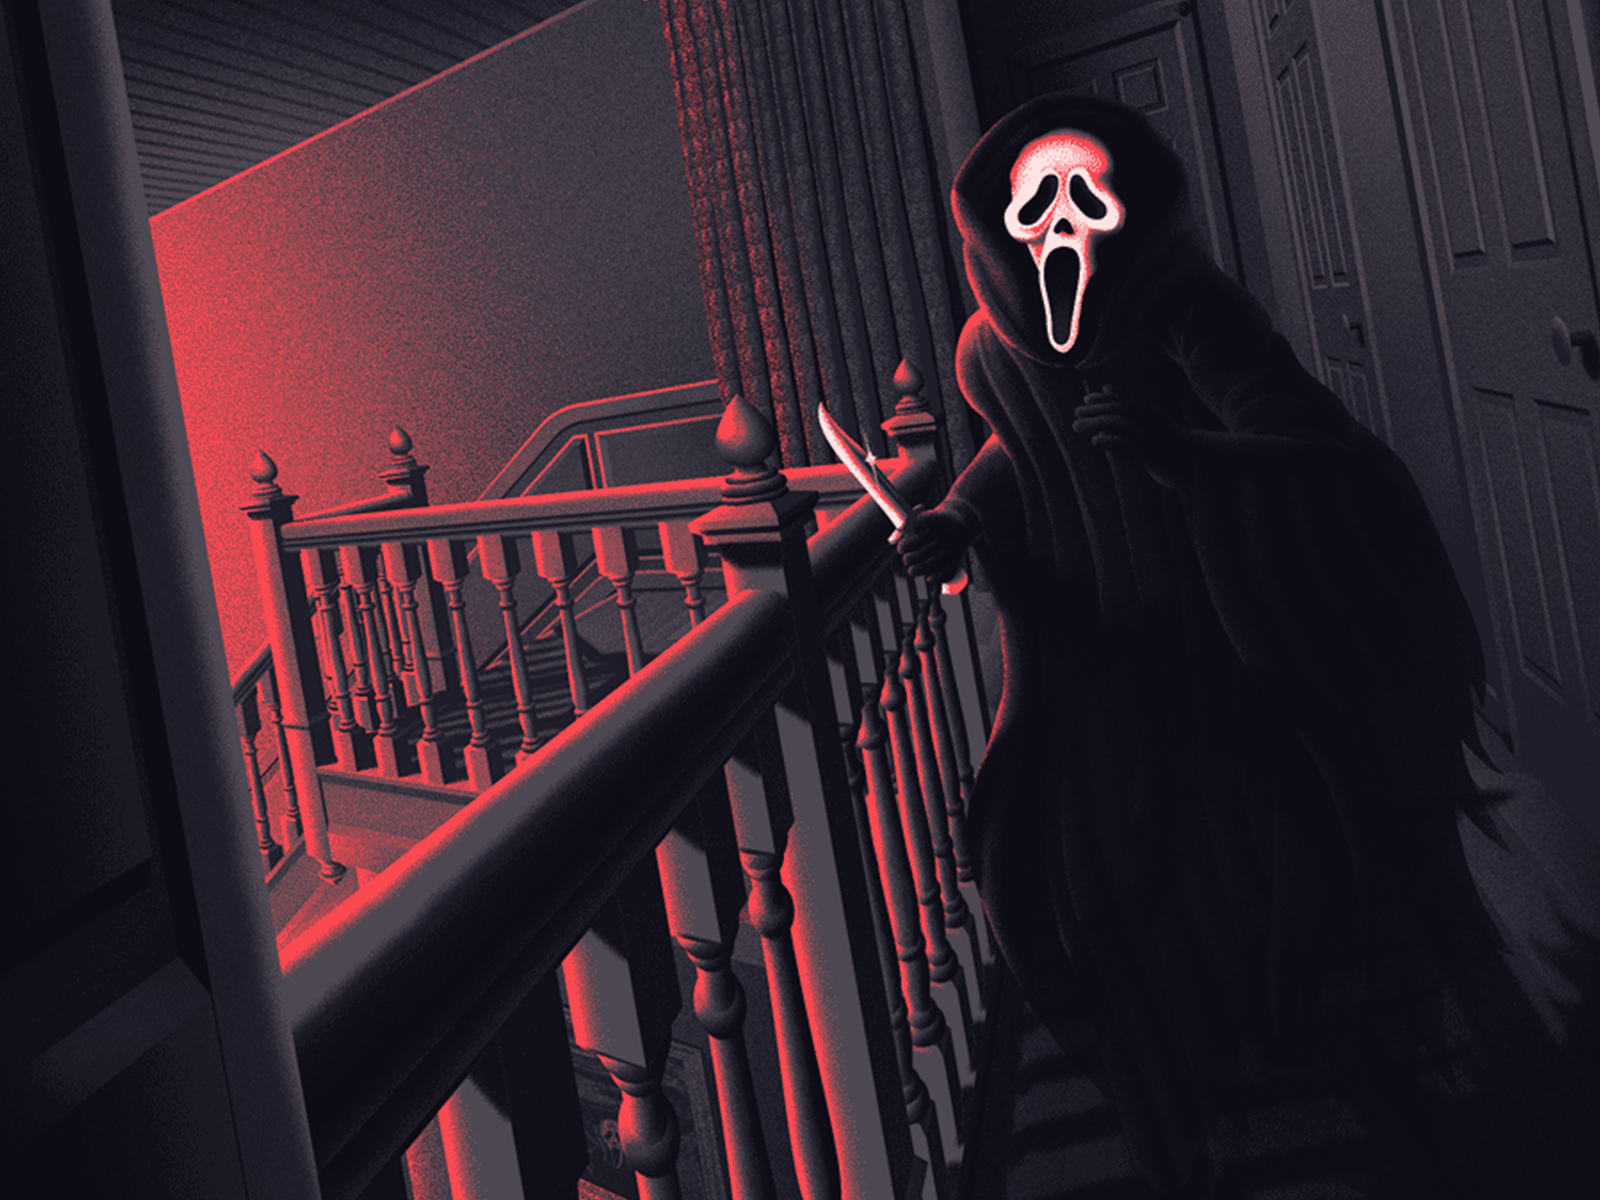 Scream Alternative Movie Poster by Melvin Mago on Dribbble